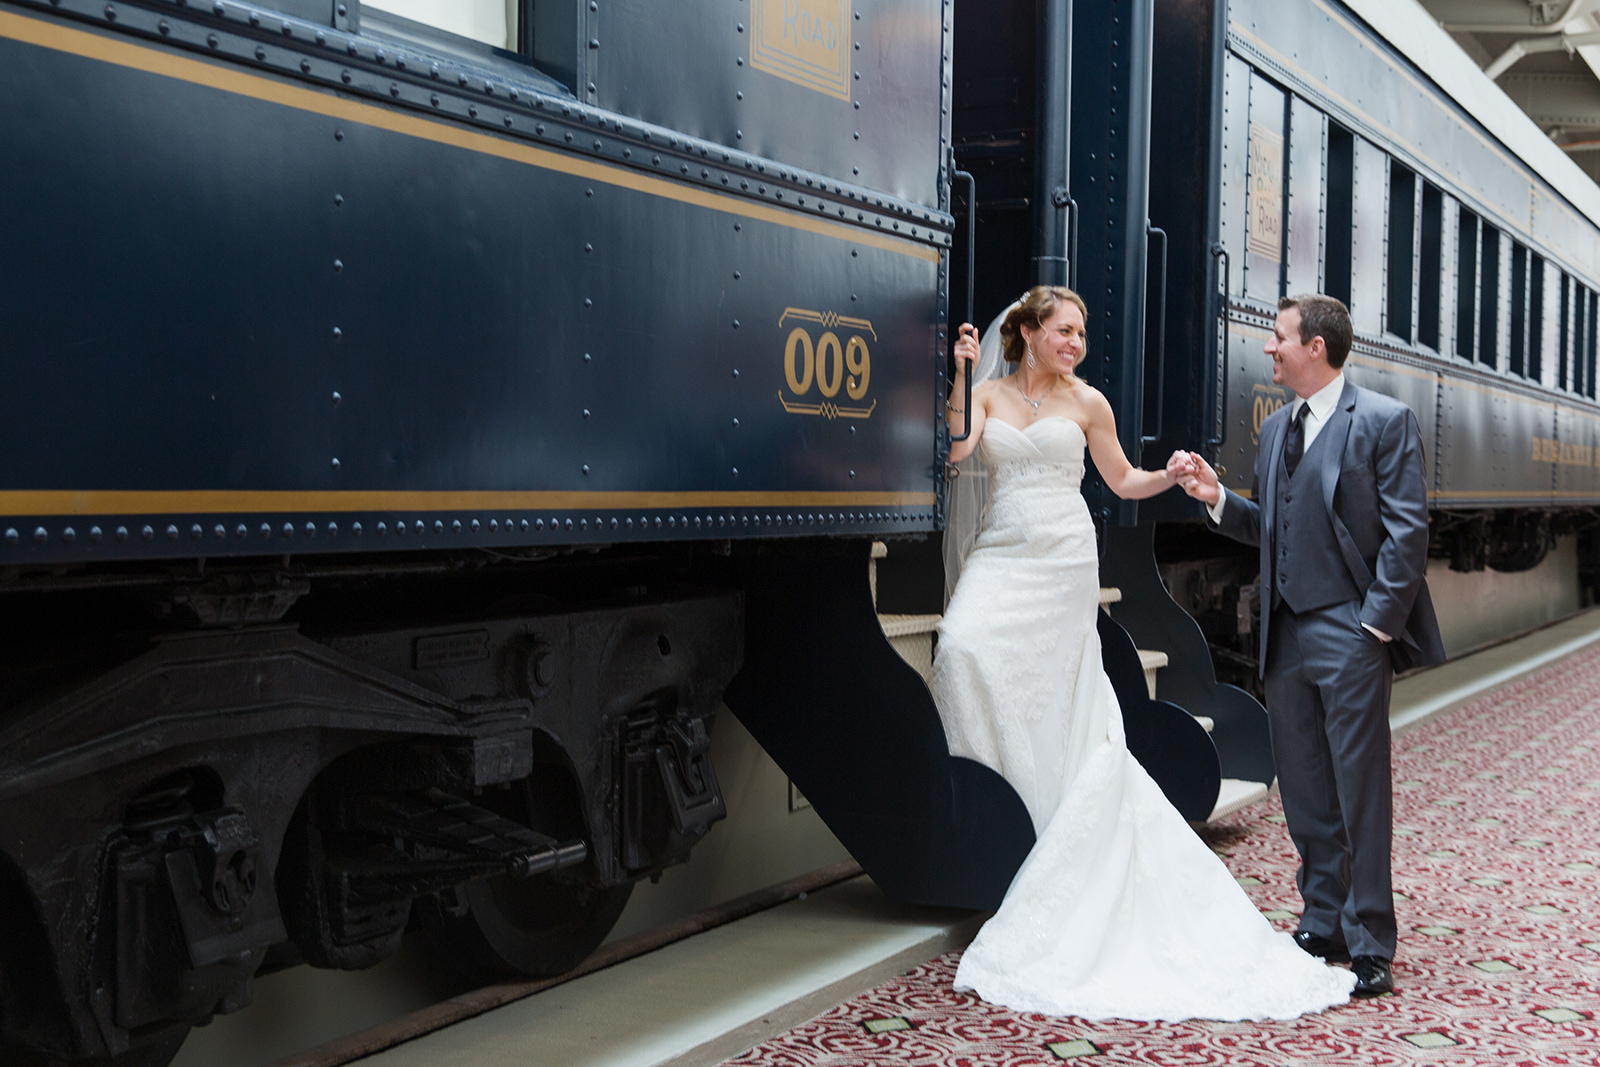 An Industrial Vintage Indianapolis Wedding - The Overwhelmed Bride Wedding Blog